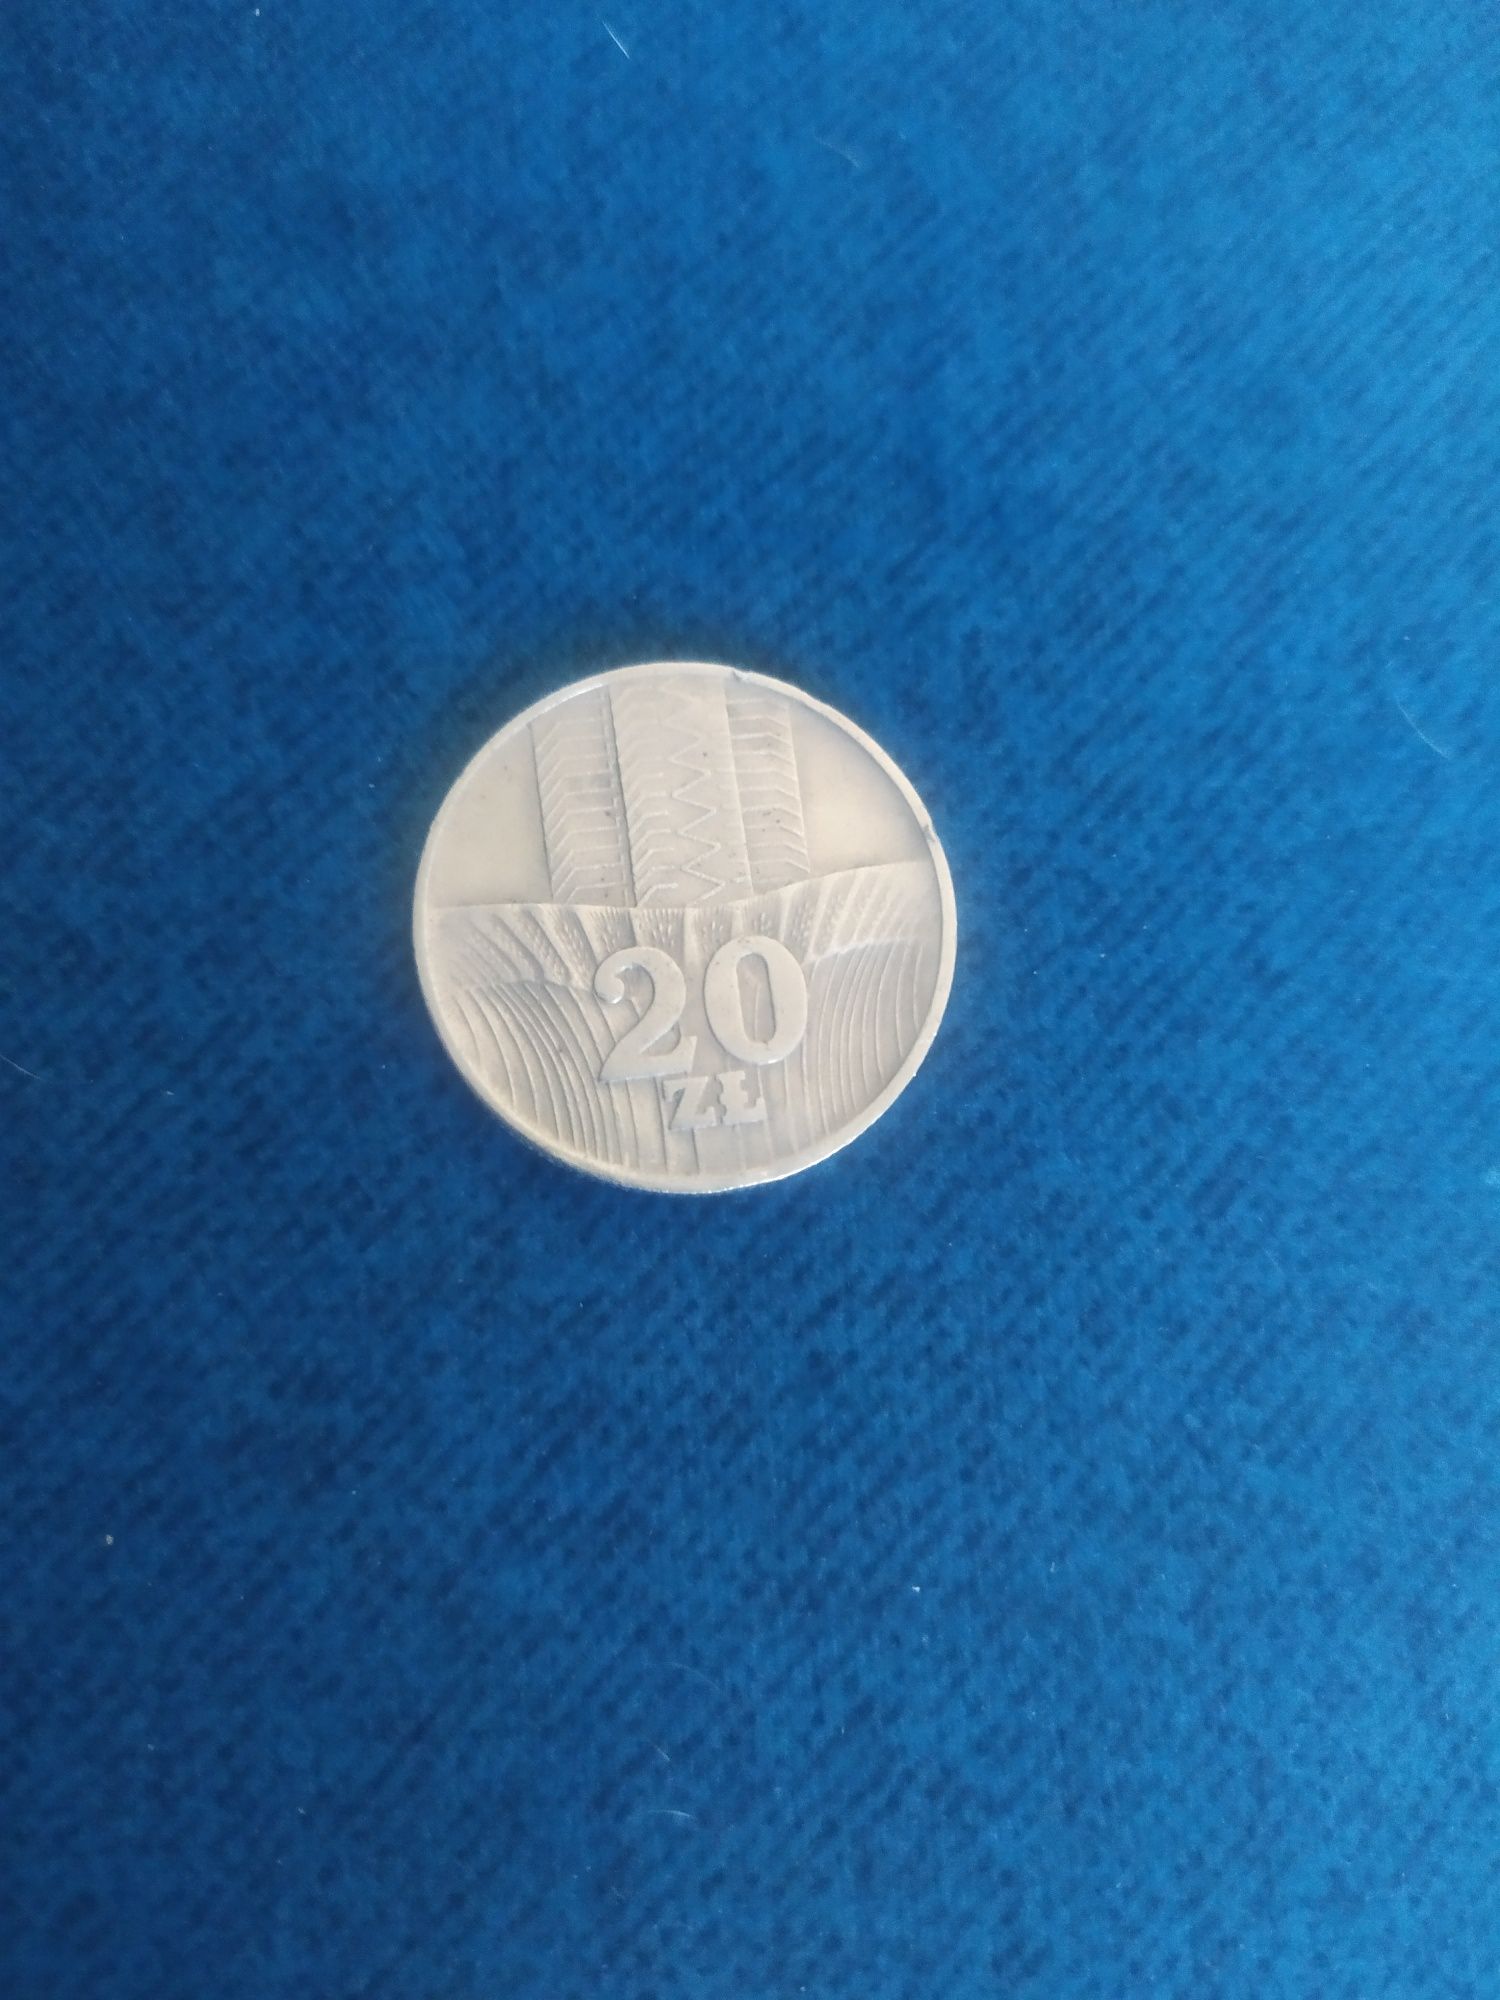 Moneta Polska Rzeczpospolita ludowa 1973